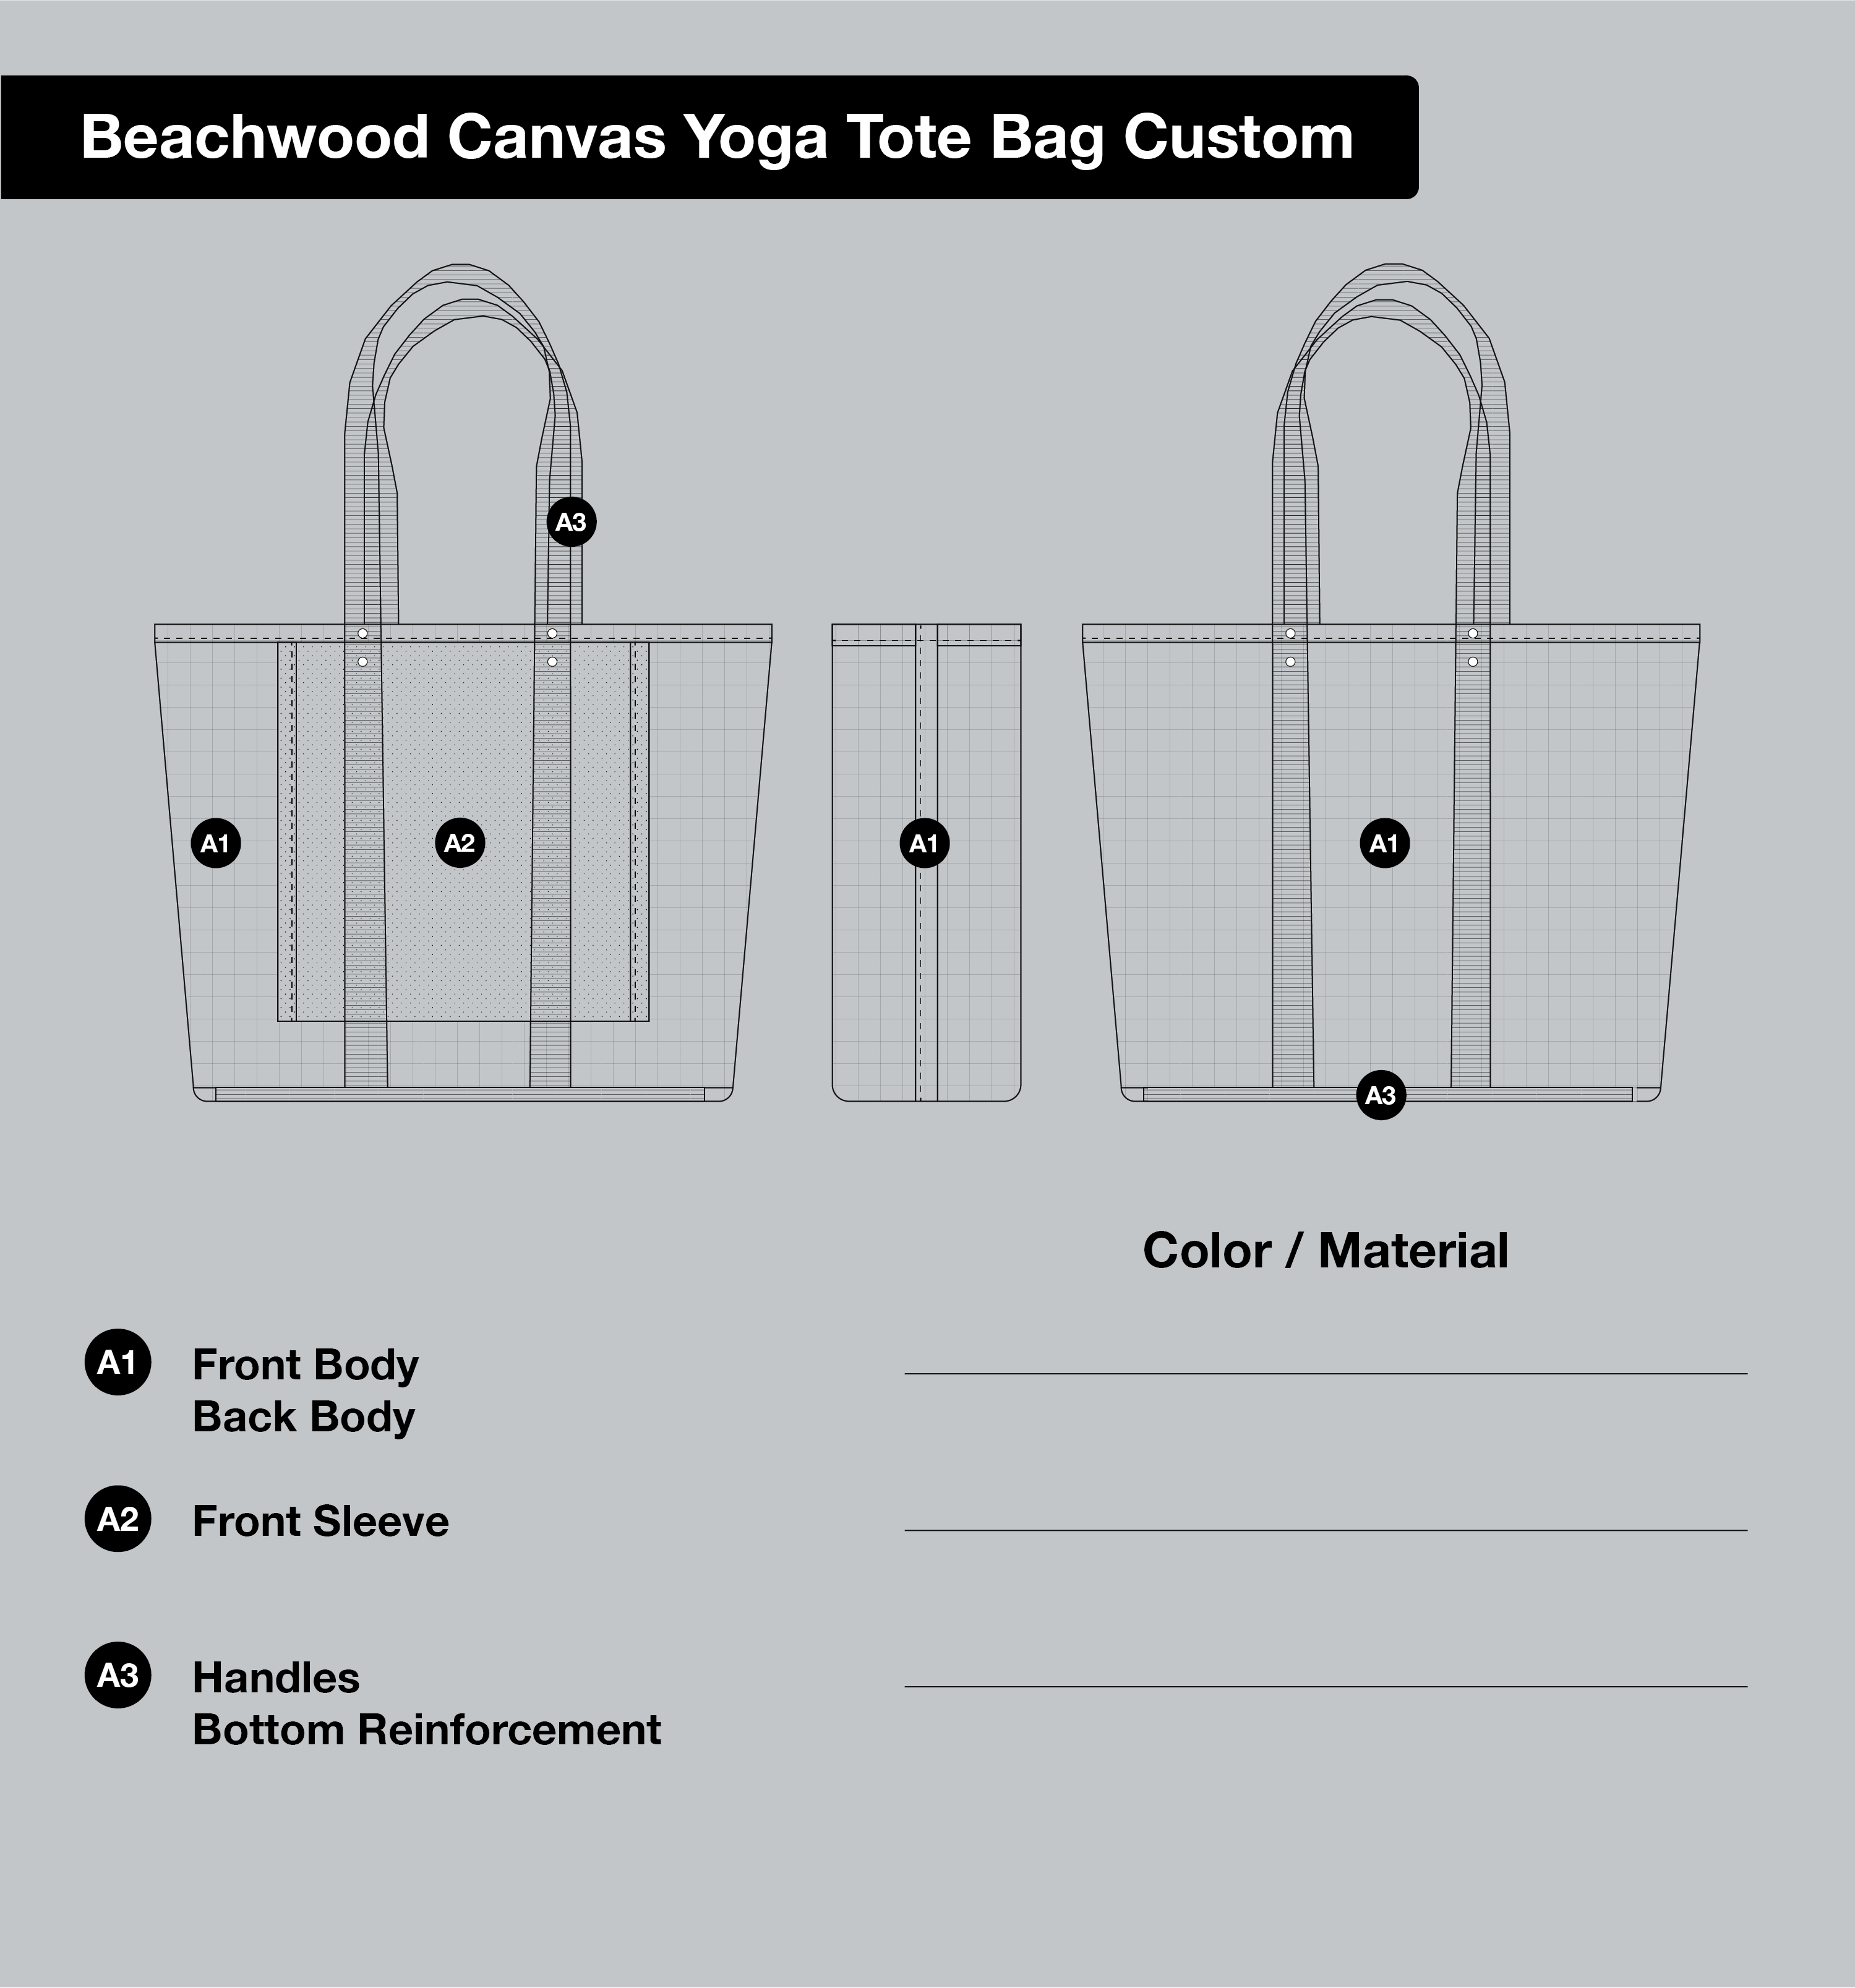 Beachwood Canvas Yoga Tote Bag Custom